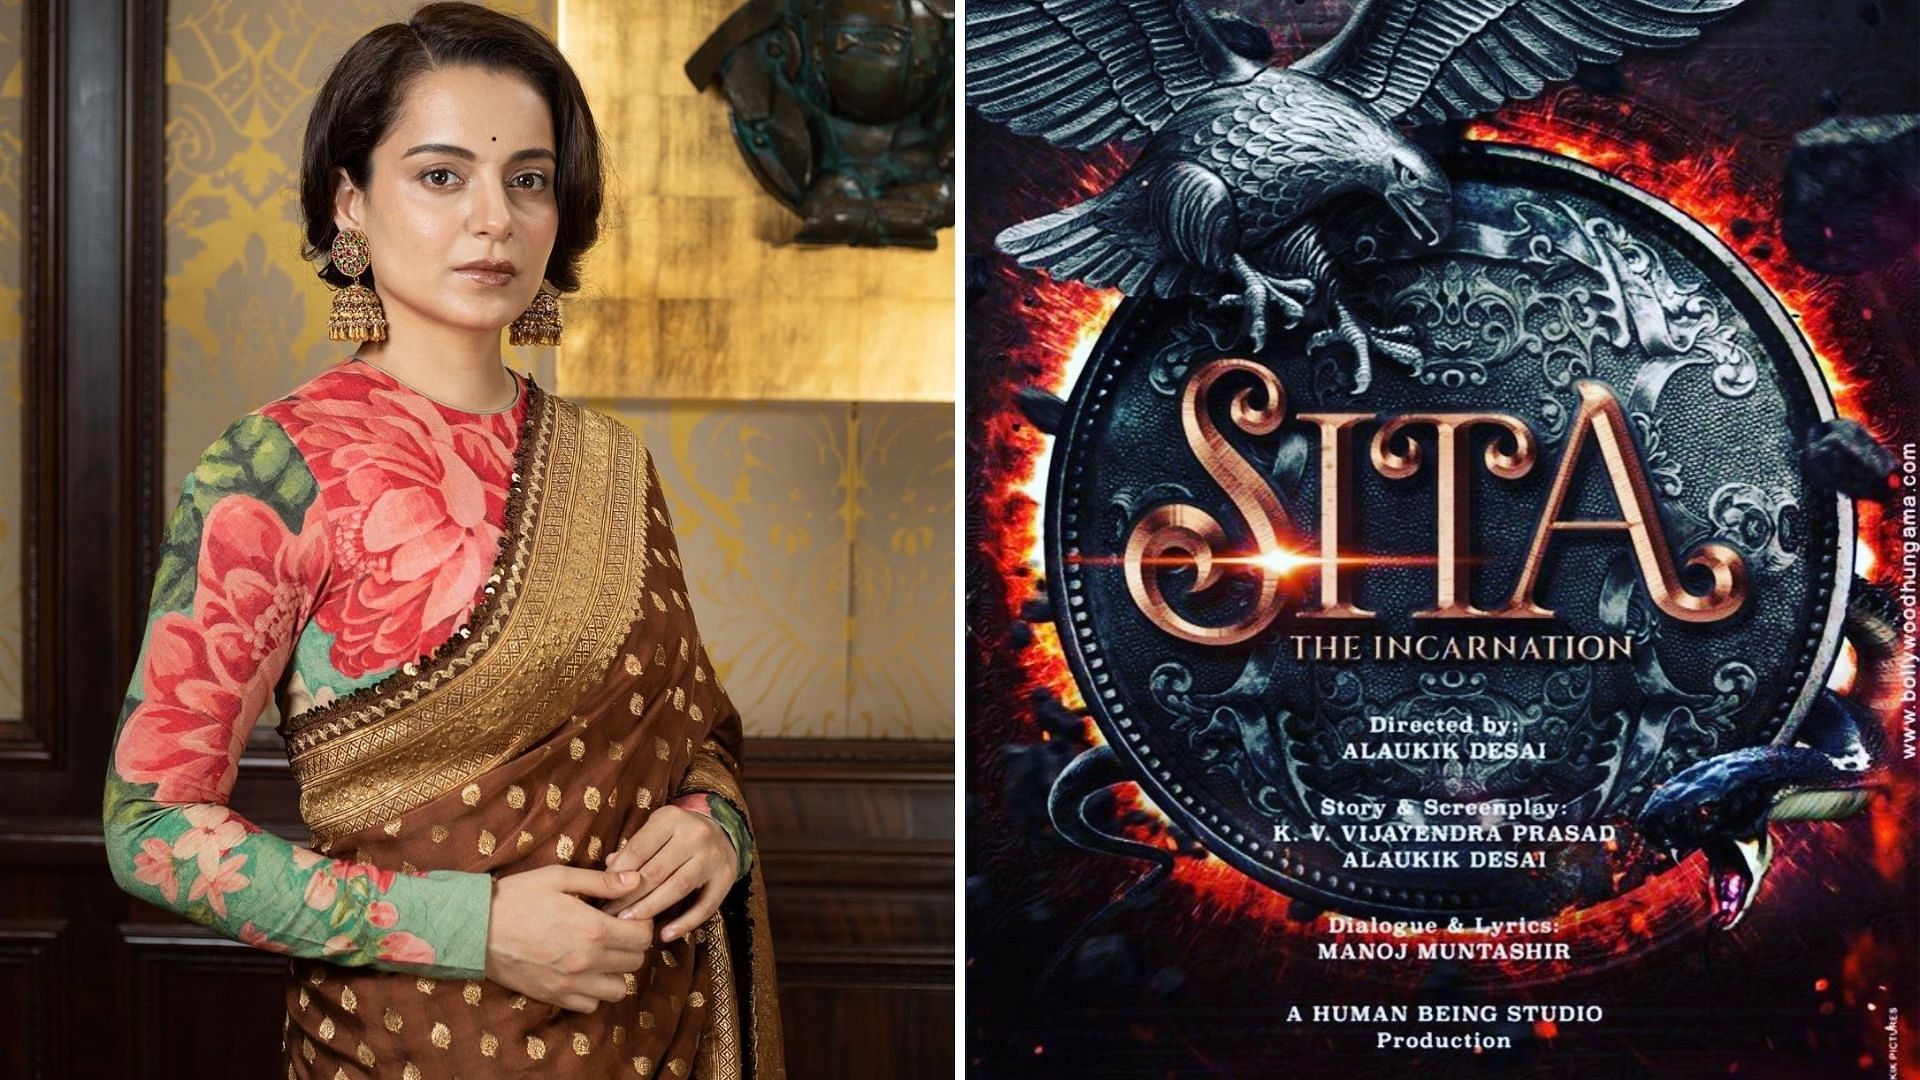 <div class="paragraphs"><p>Kangana Ranaut will play Sita in <em>Sita: The Incarnation</em>.</p></div>